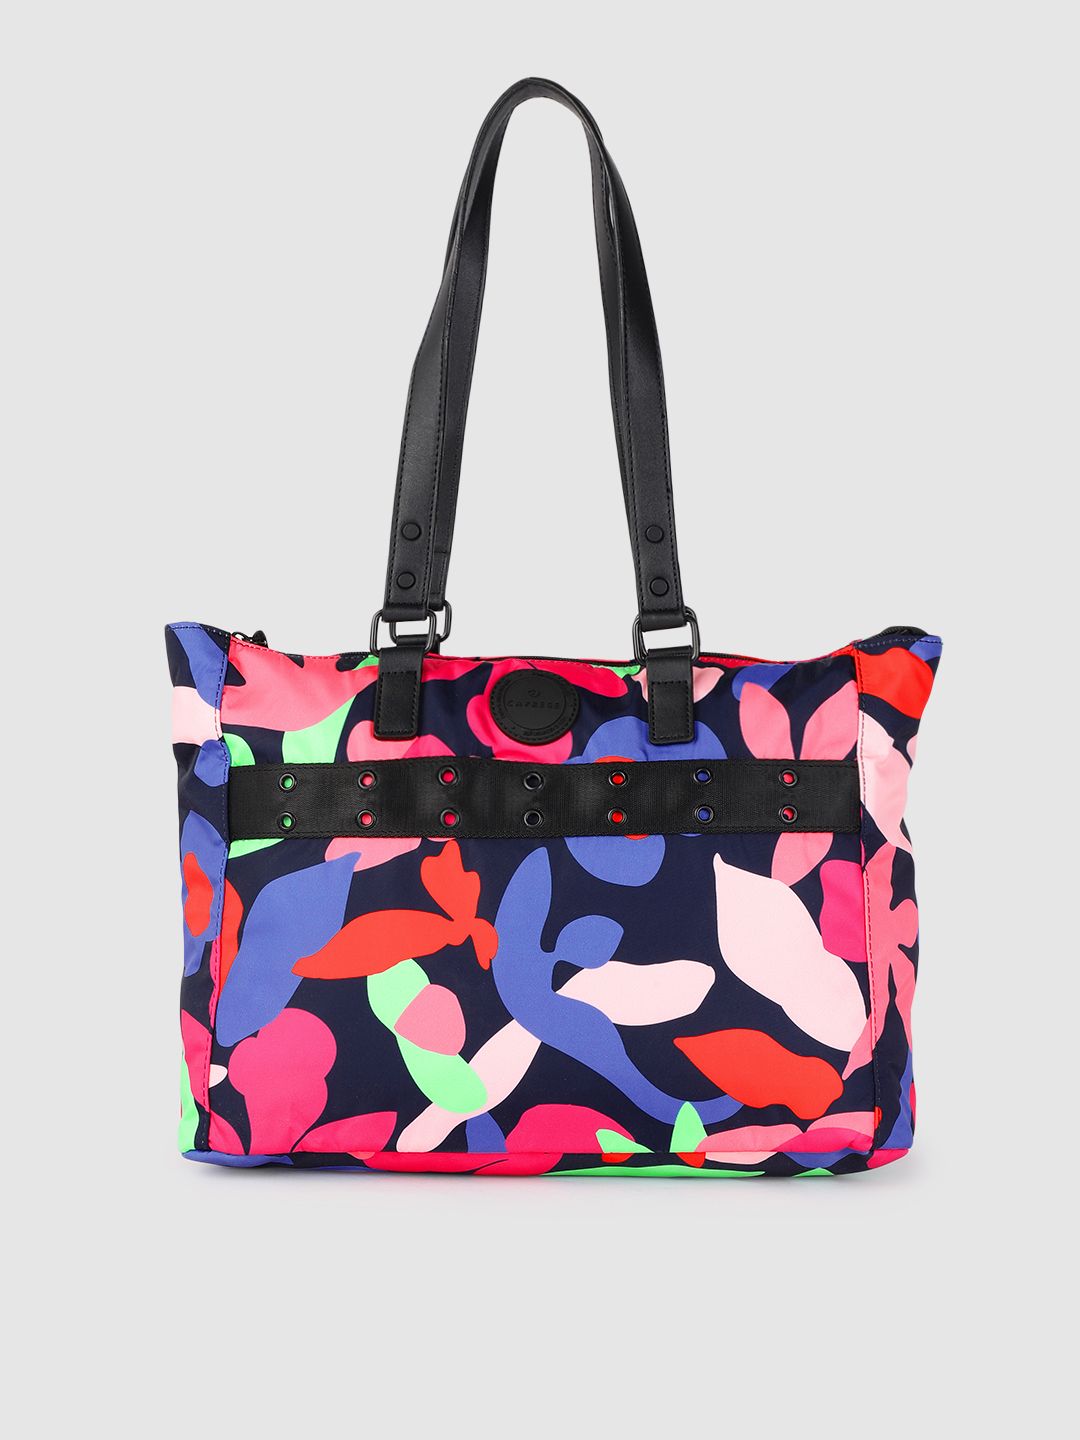 Caprese Multicoloured Printed Structured Shoulder Bag Price in India